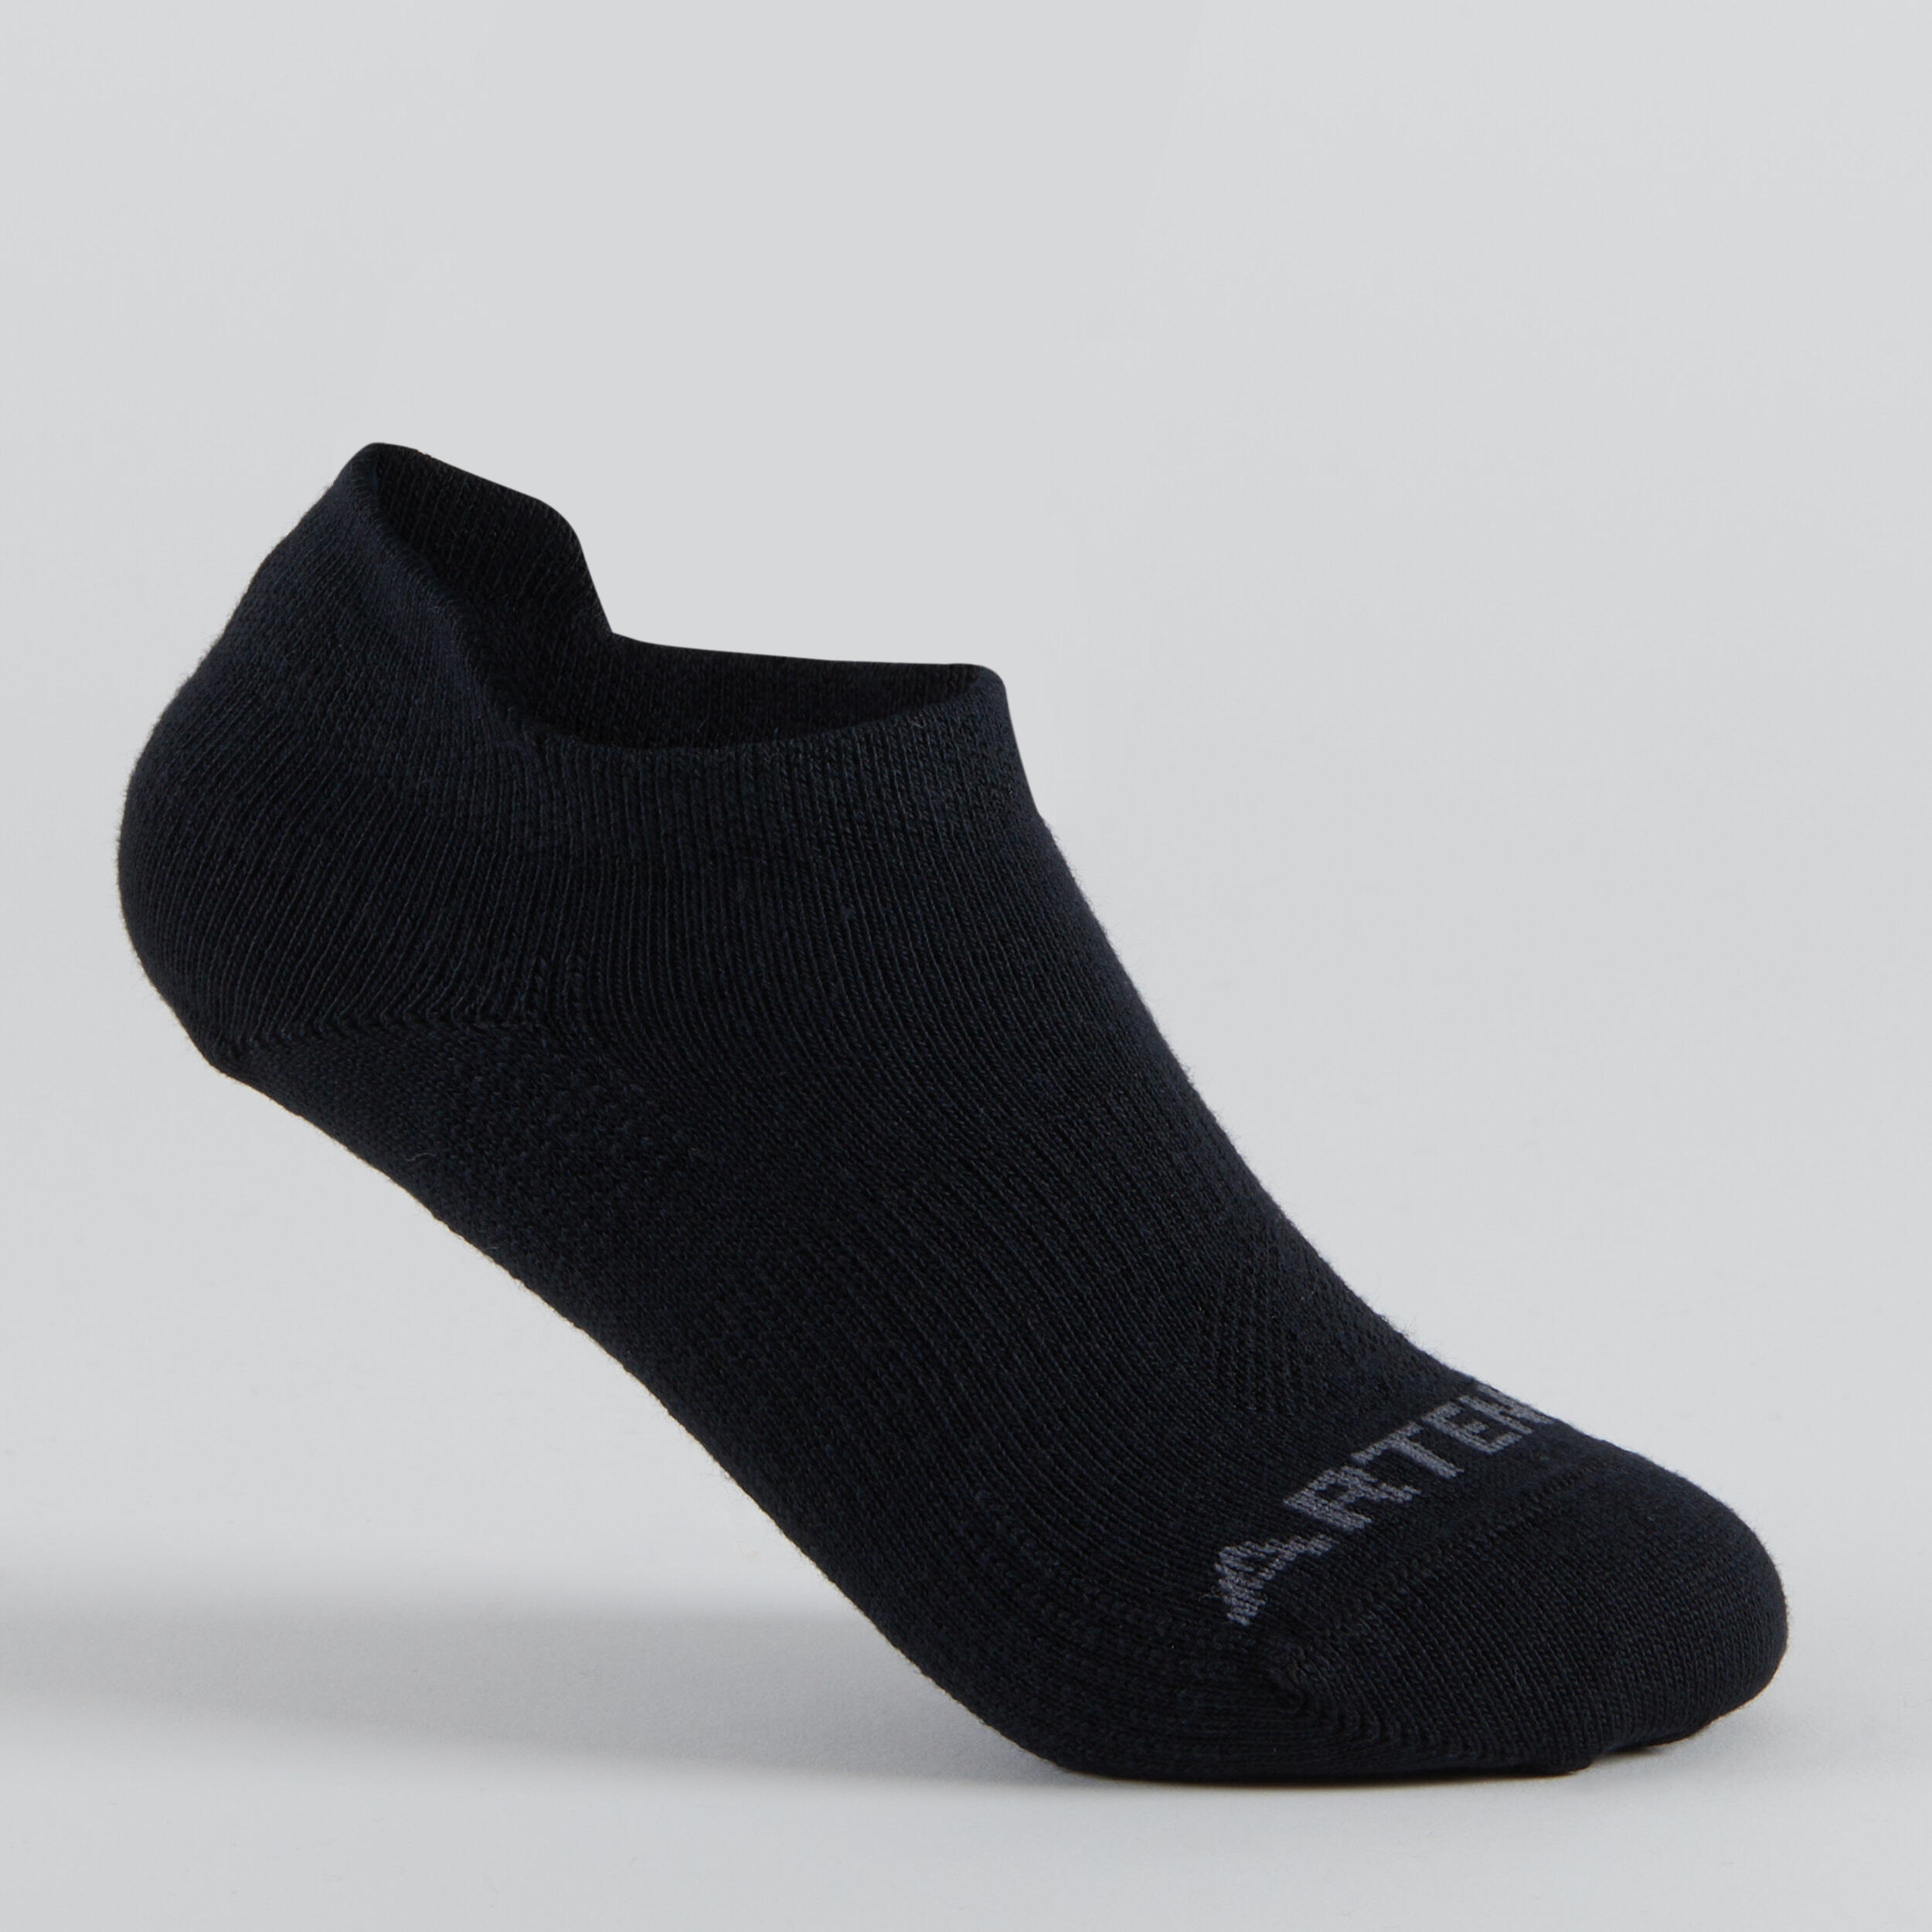 Kids' Low-Cut Tennis Socks Tri-Pack RS 160 - Black/Black/Grey 2/8